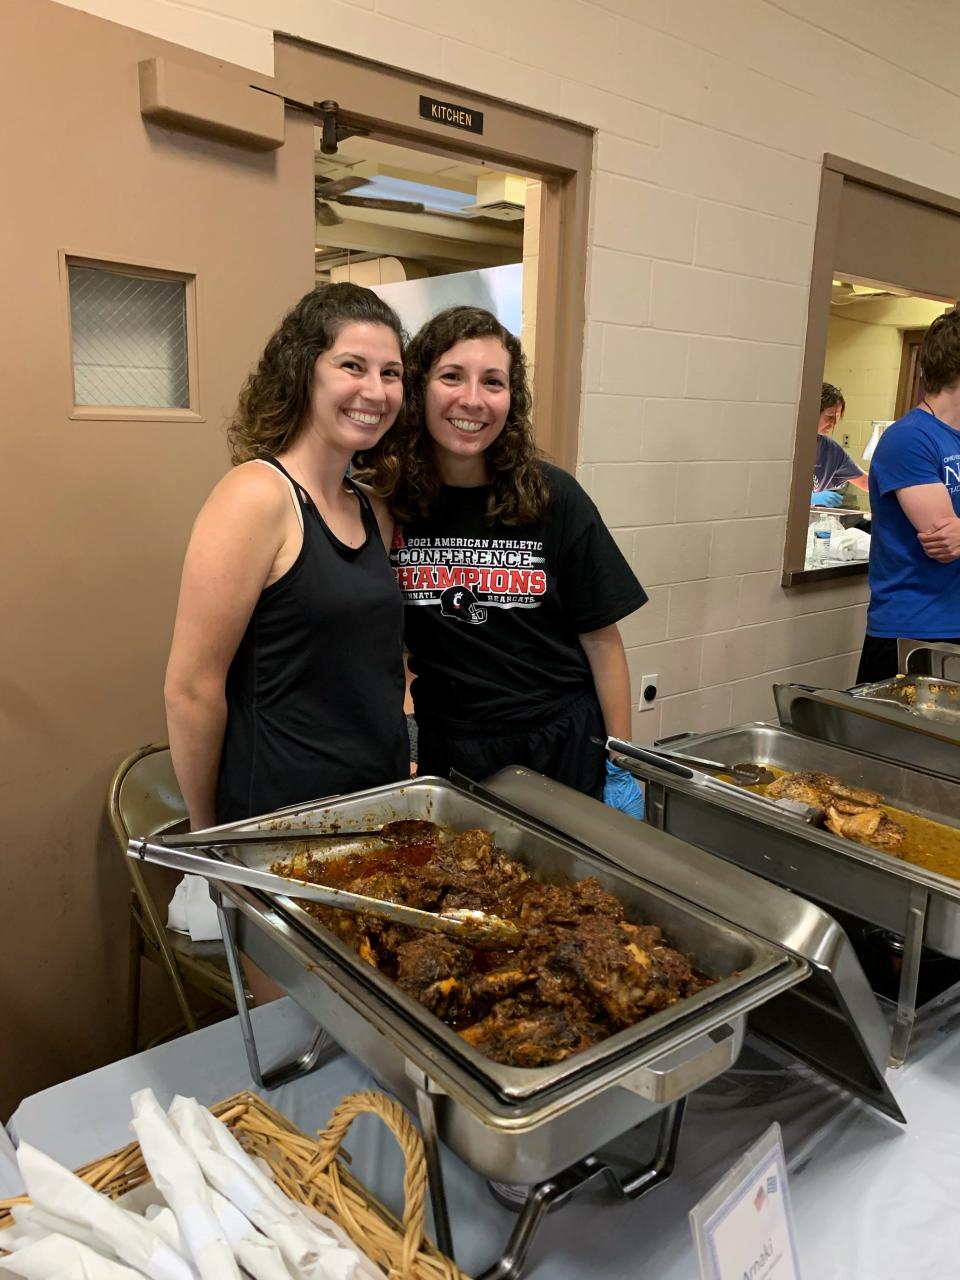 Two church volunteers help serve Greek food at the festival.